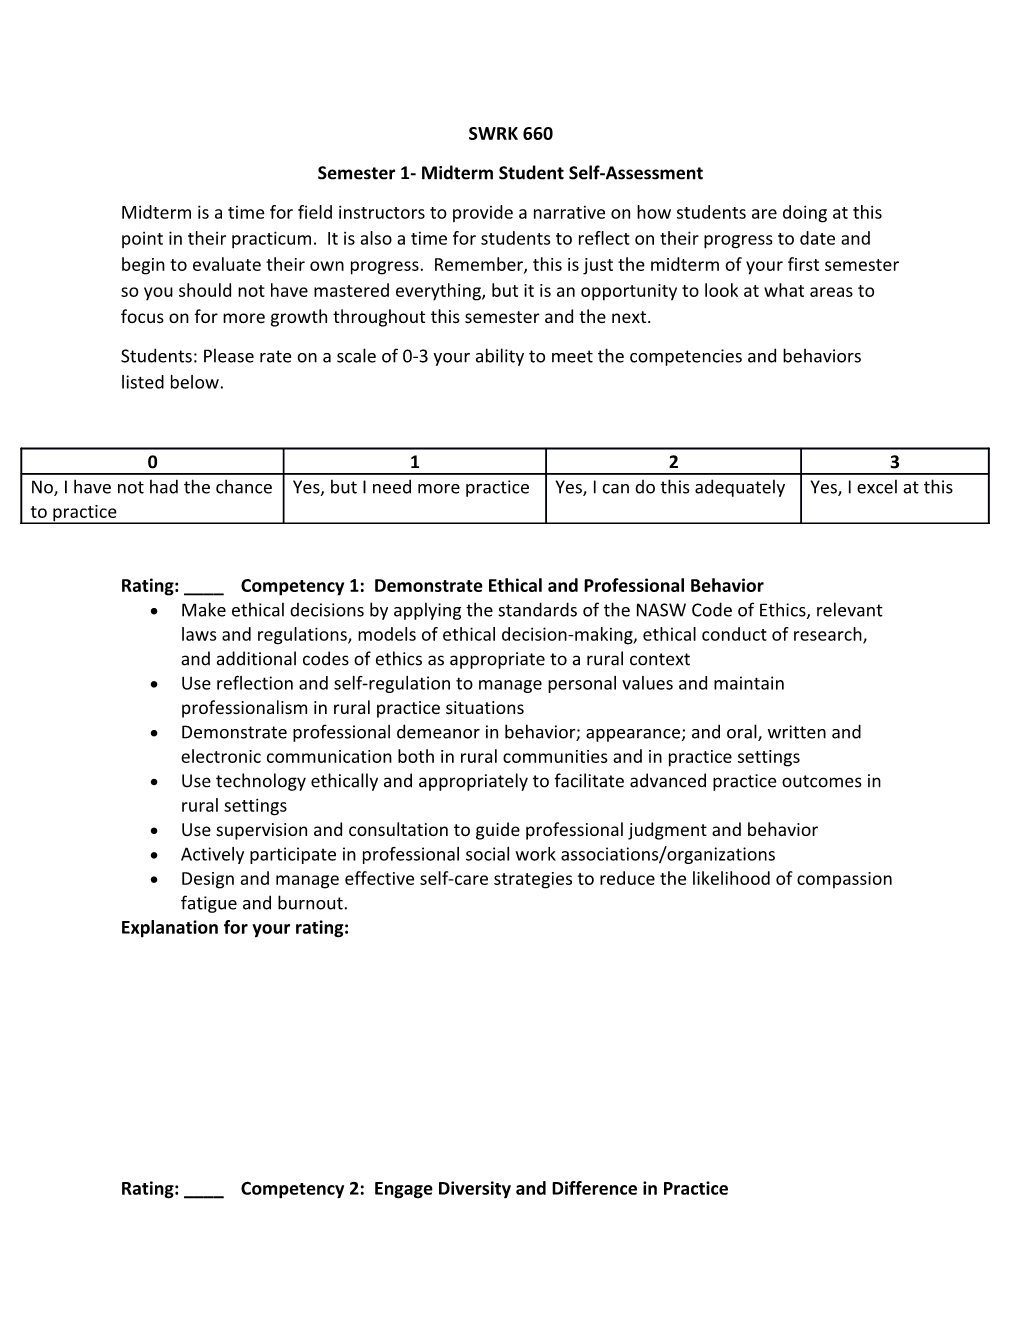 Semester 1- Midterm Student Self-Assessment